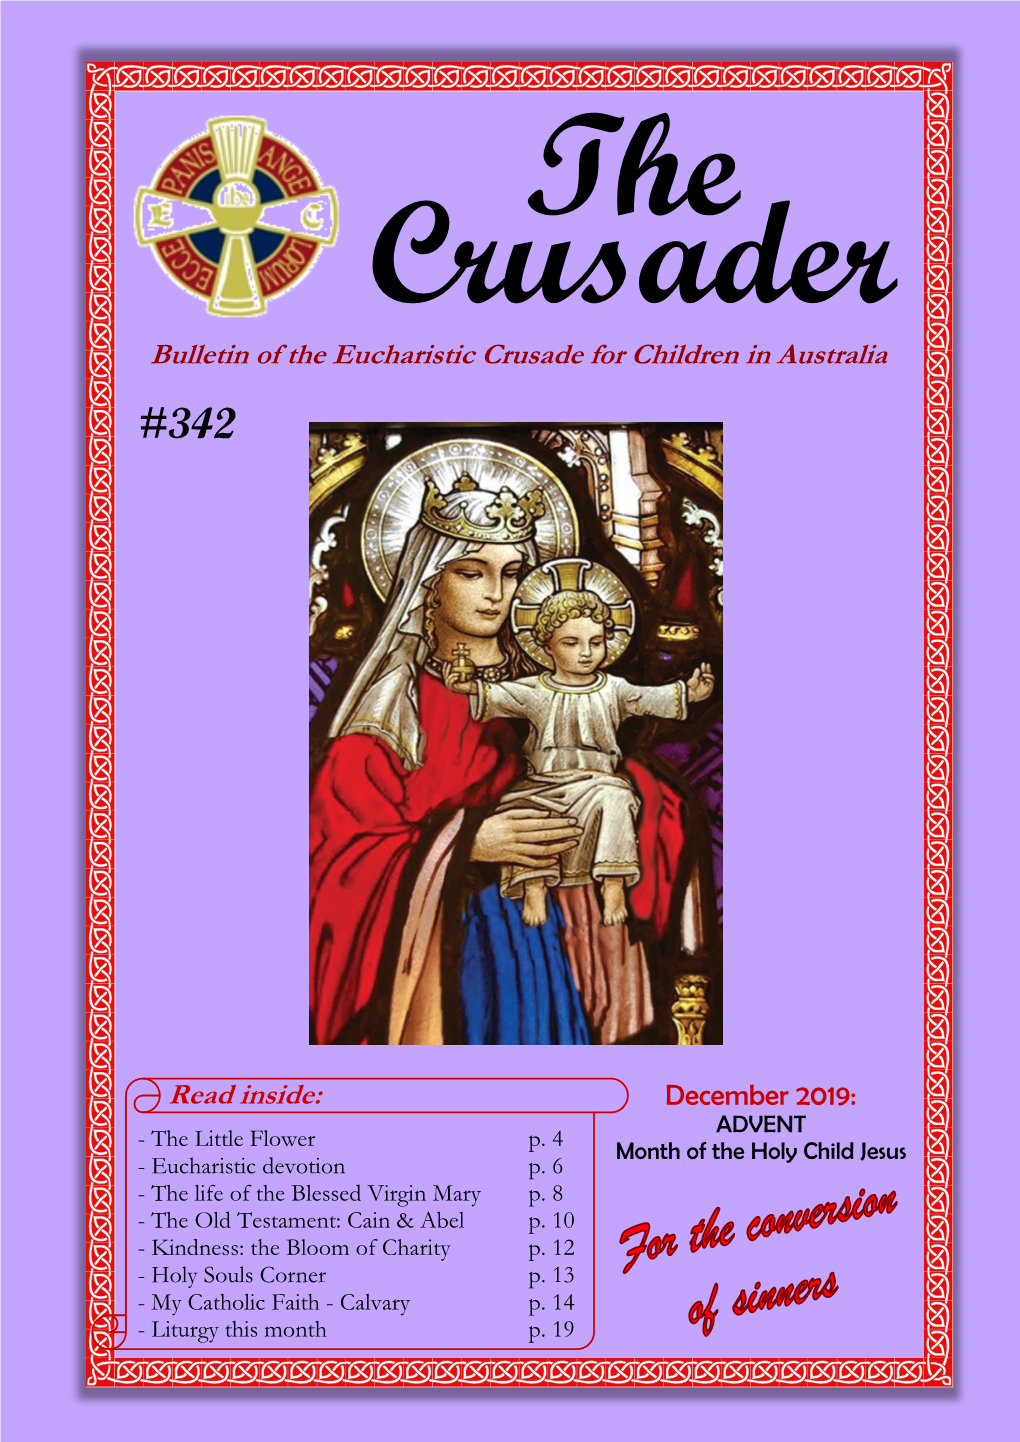 The Crusader Bulletin of the Eucharistic Crusade for Children in Australia #342